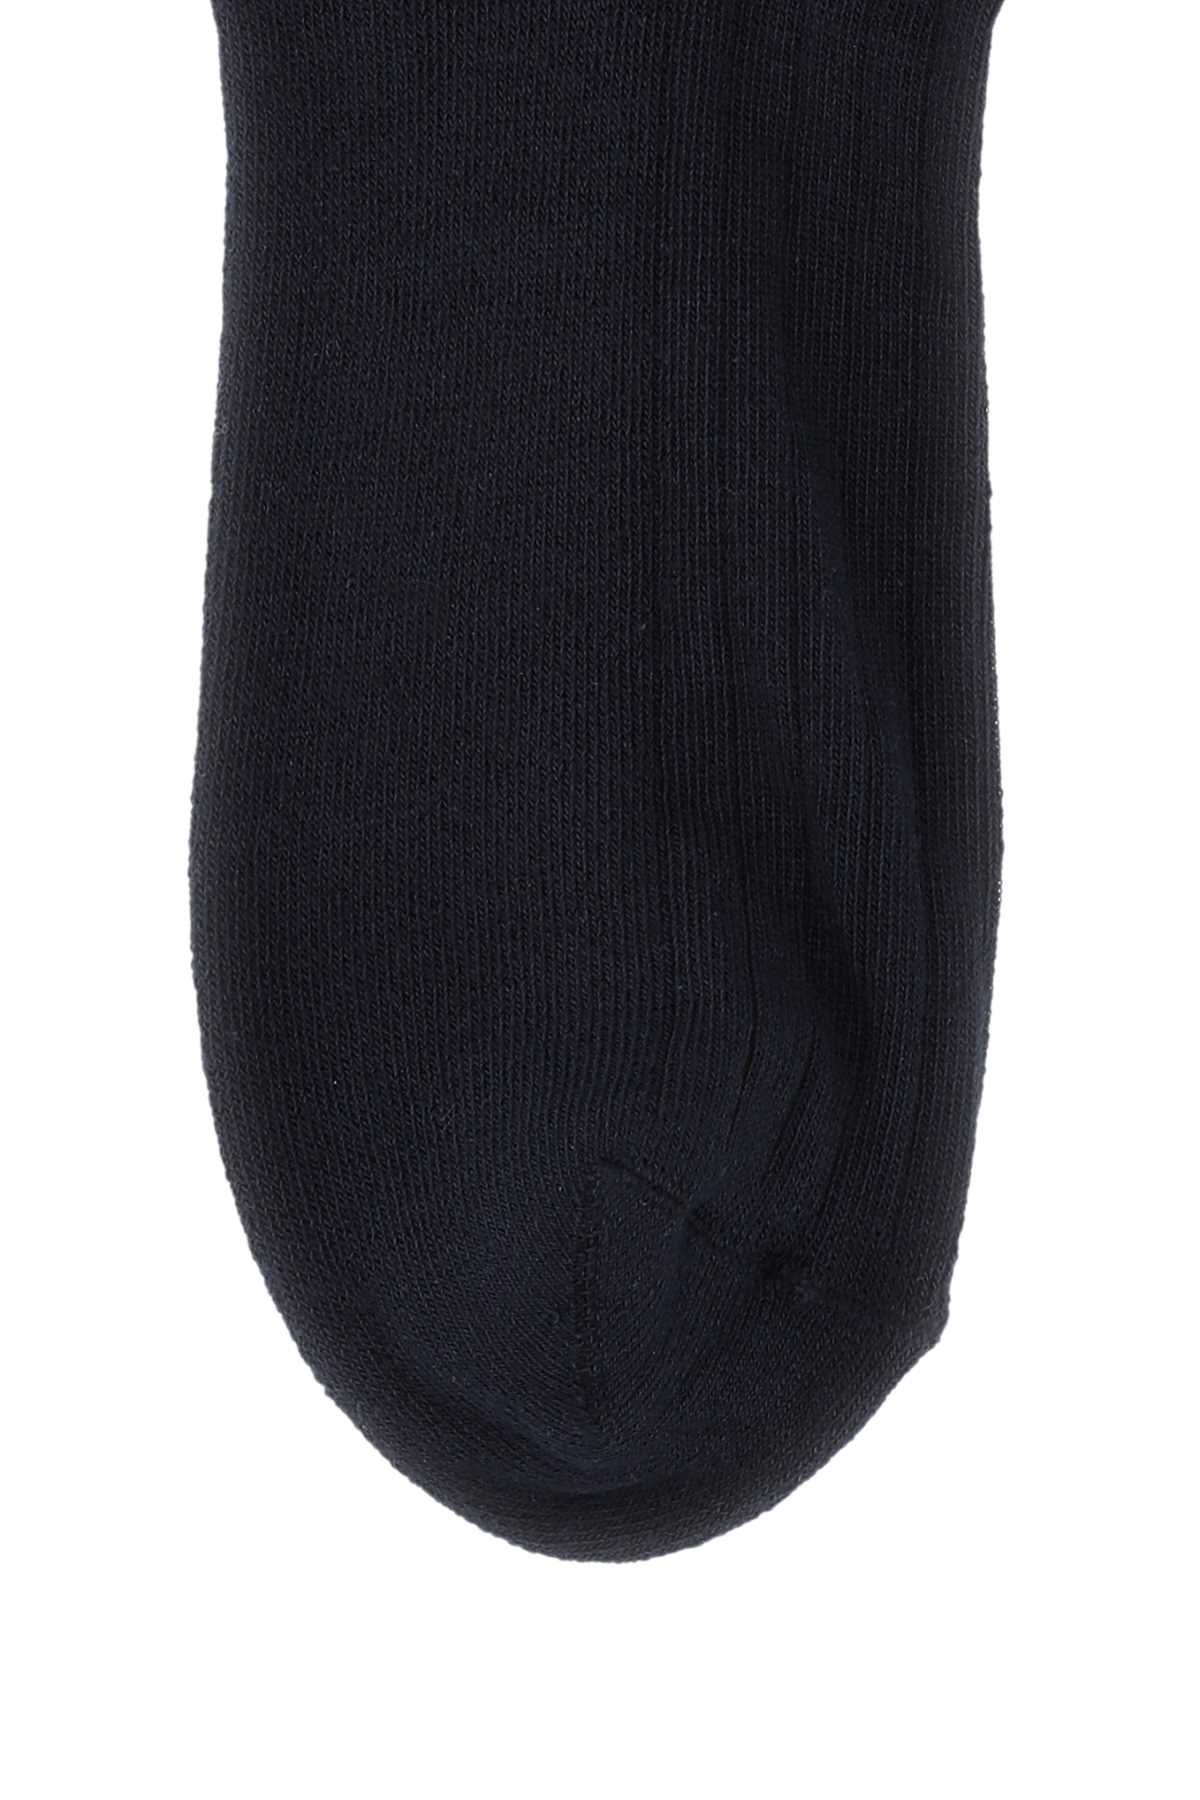 Thom Browne Midnight Blue Stretch Cotton Blend Socks In 415